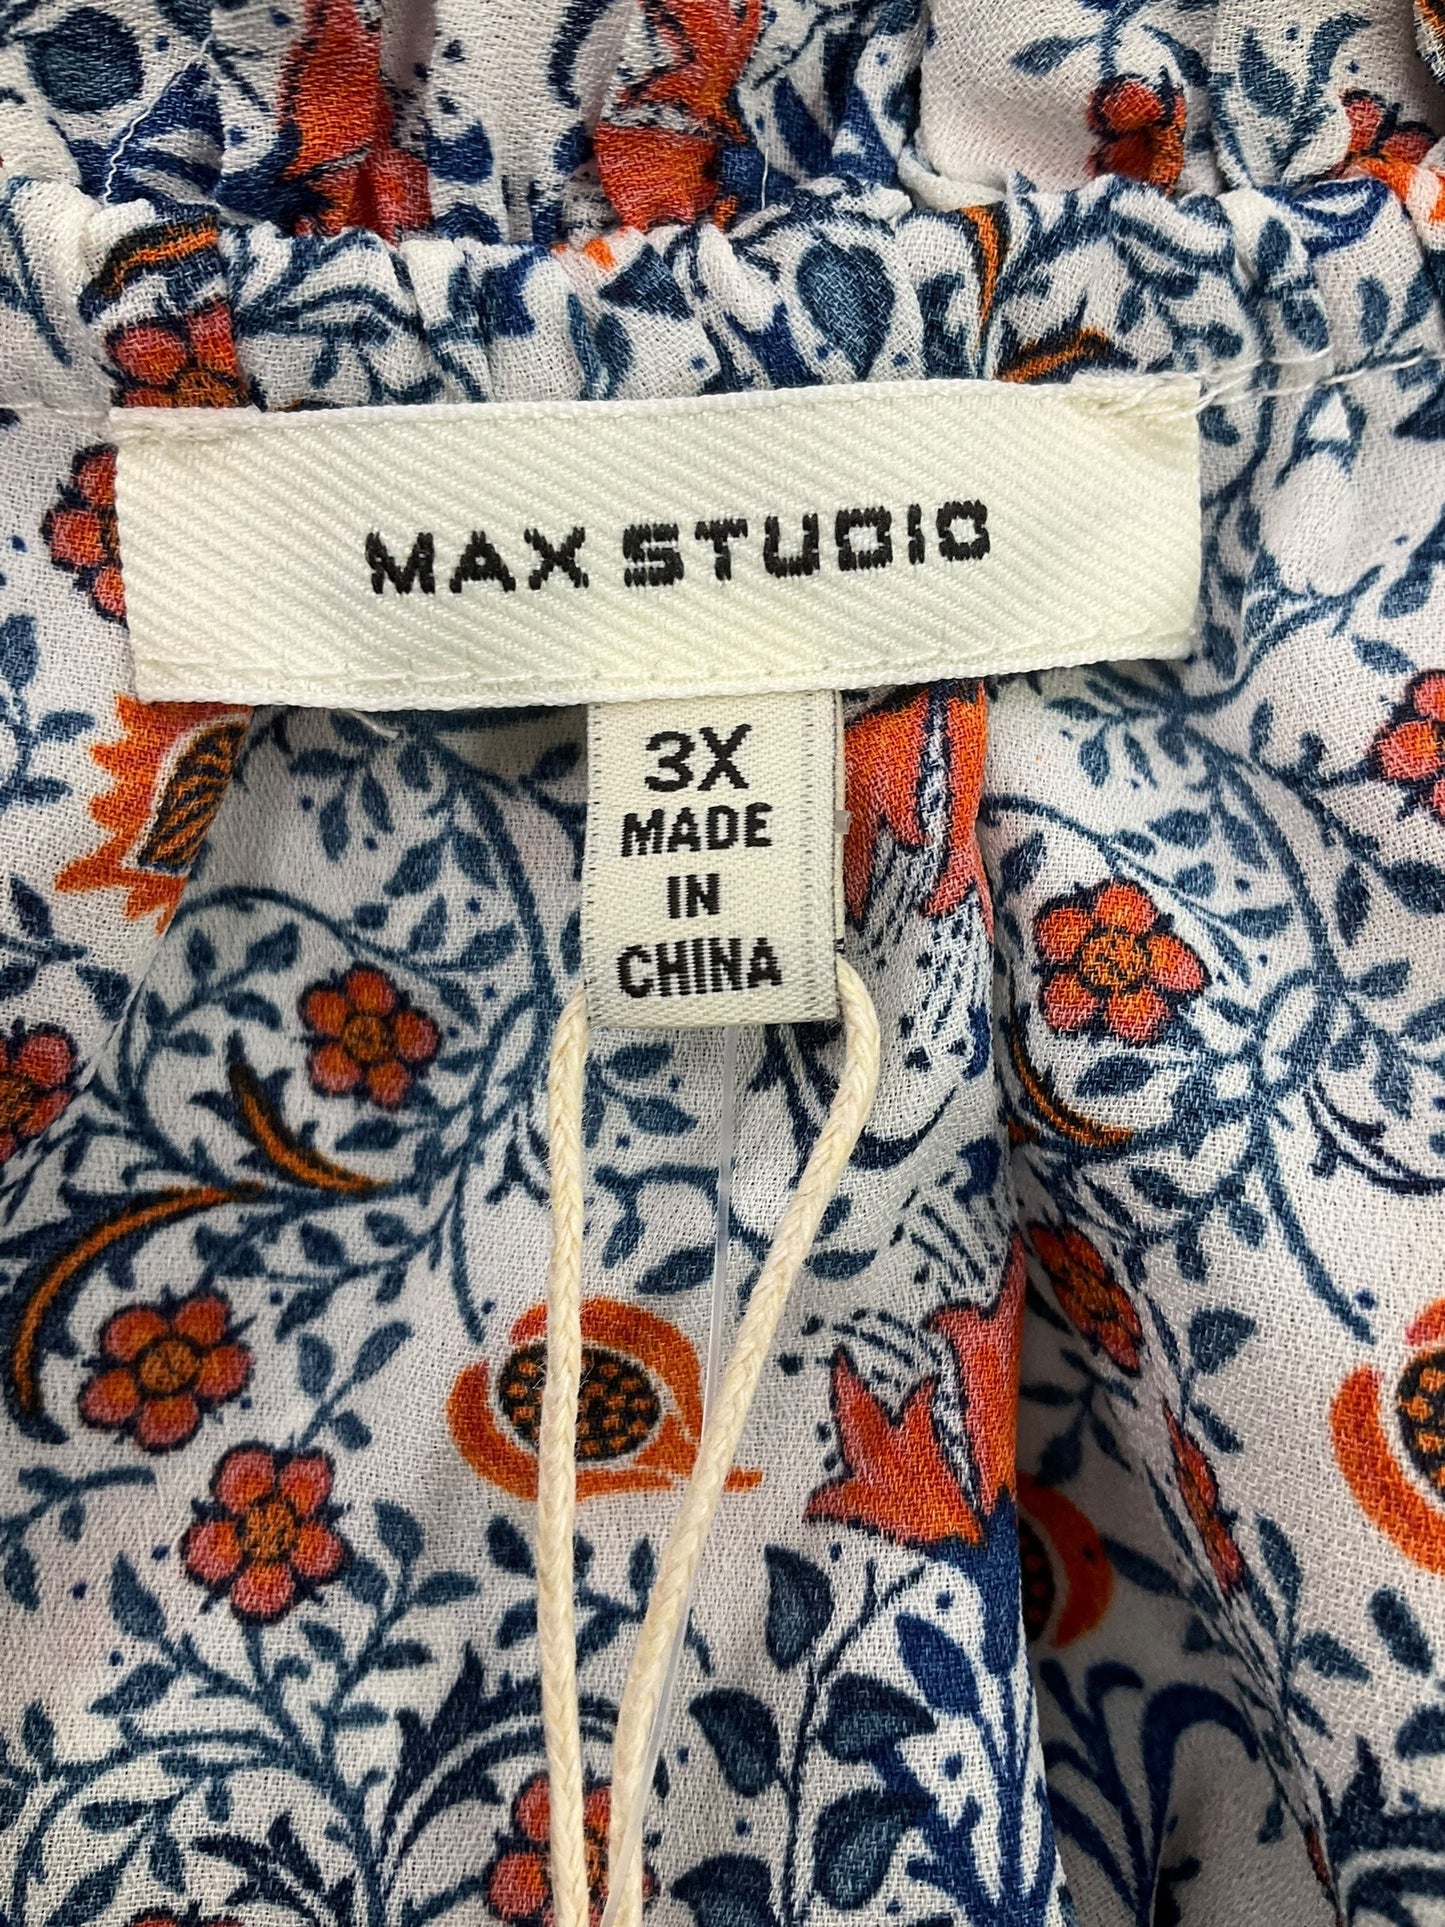 Floral Print Top 3/4 Sleeve Max Studio, Size 3x